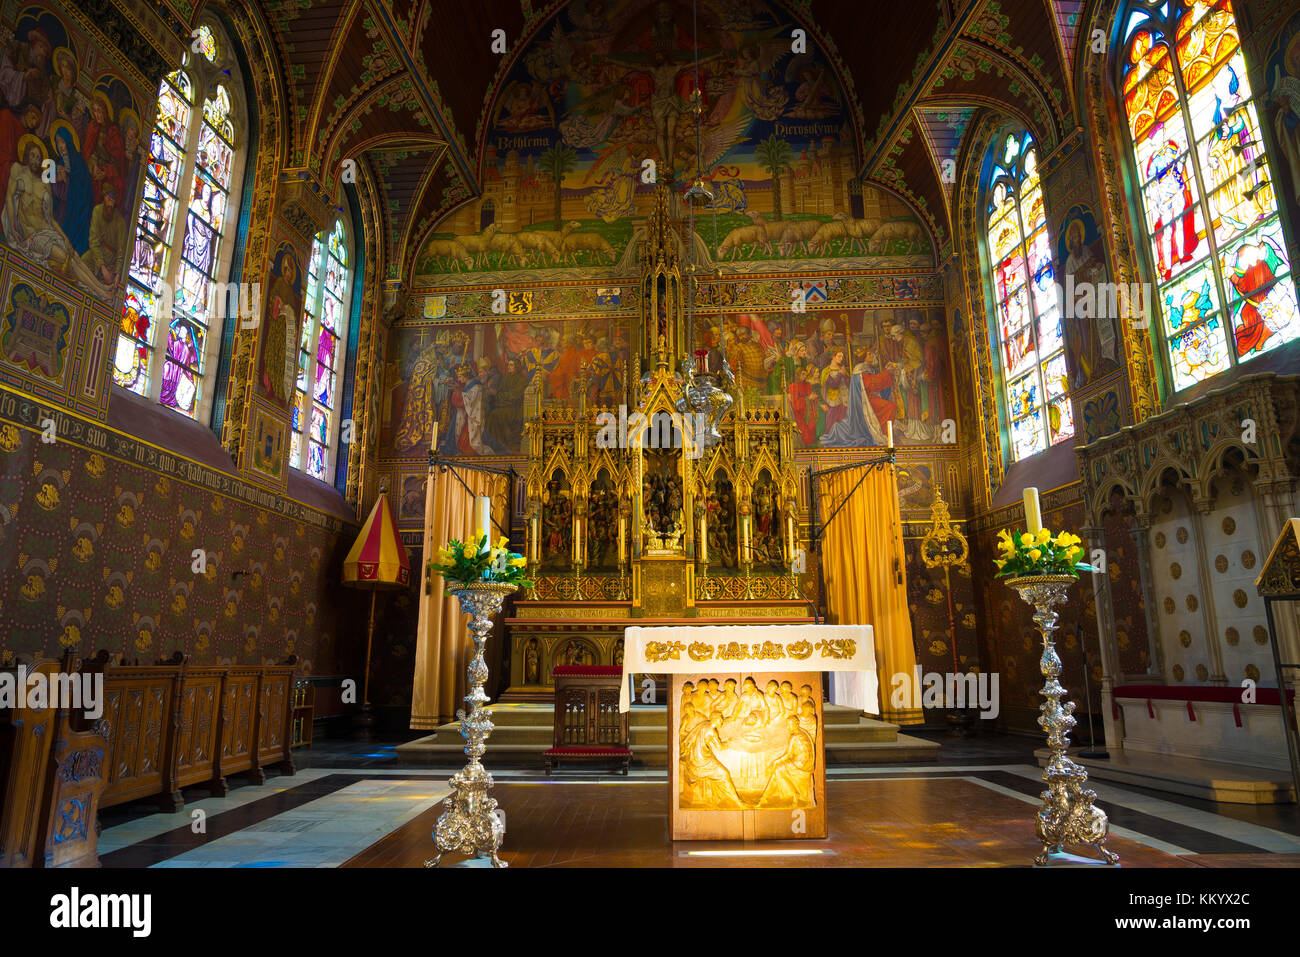 Bruges, Belgium - April 18, 2017: Interior of the Basilica of the Holy Blood - Basiliek van het Heilig Bloed Stock Photo